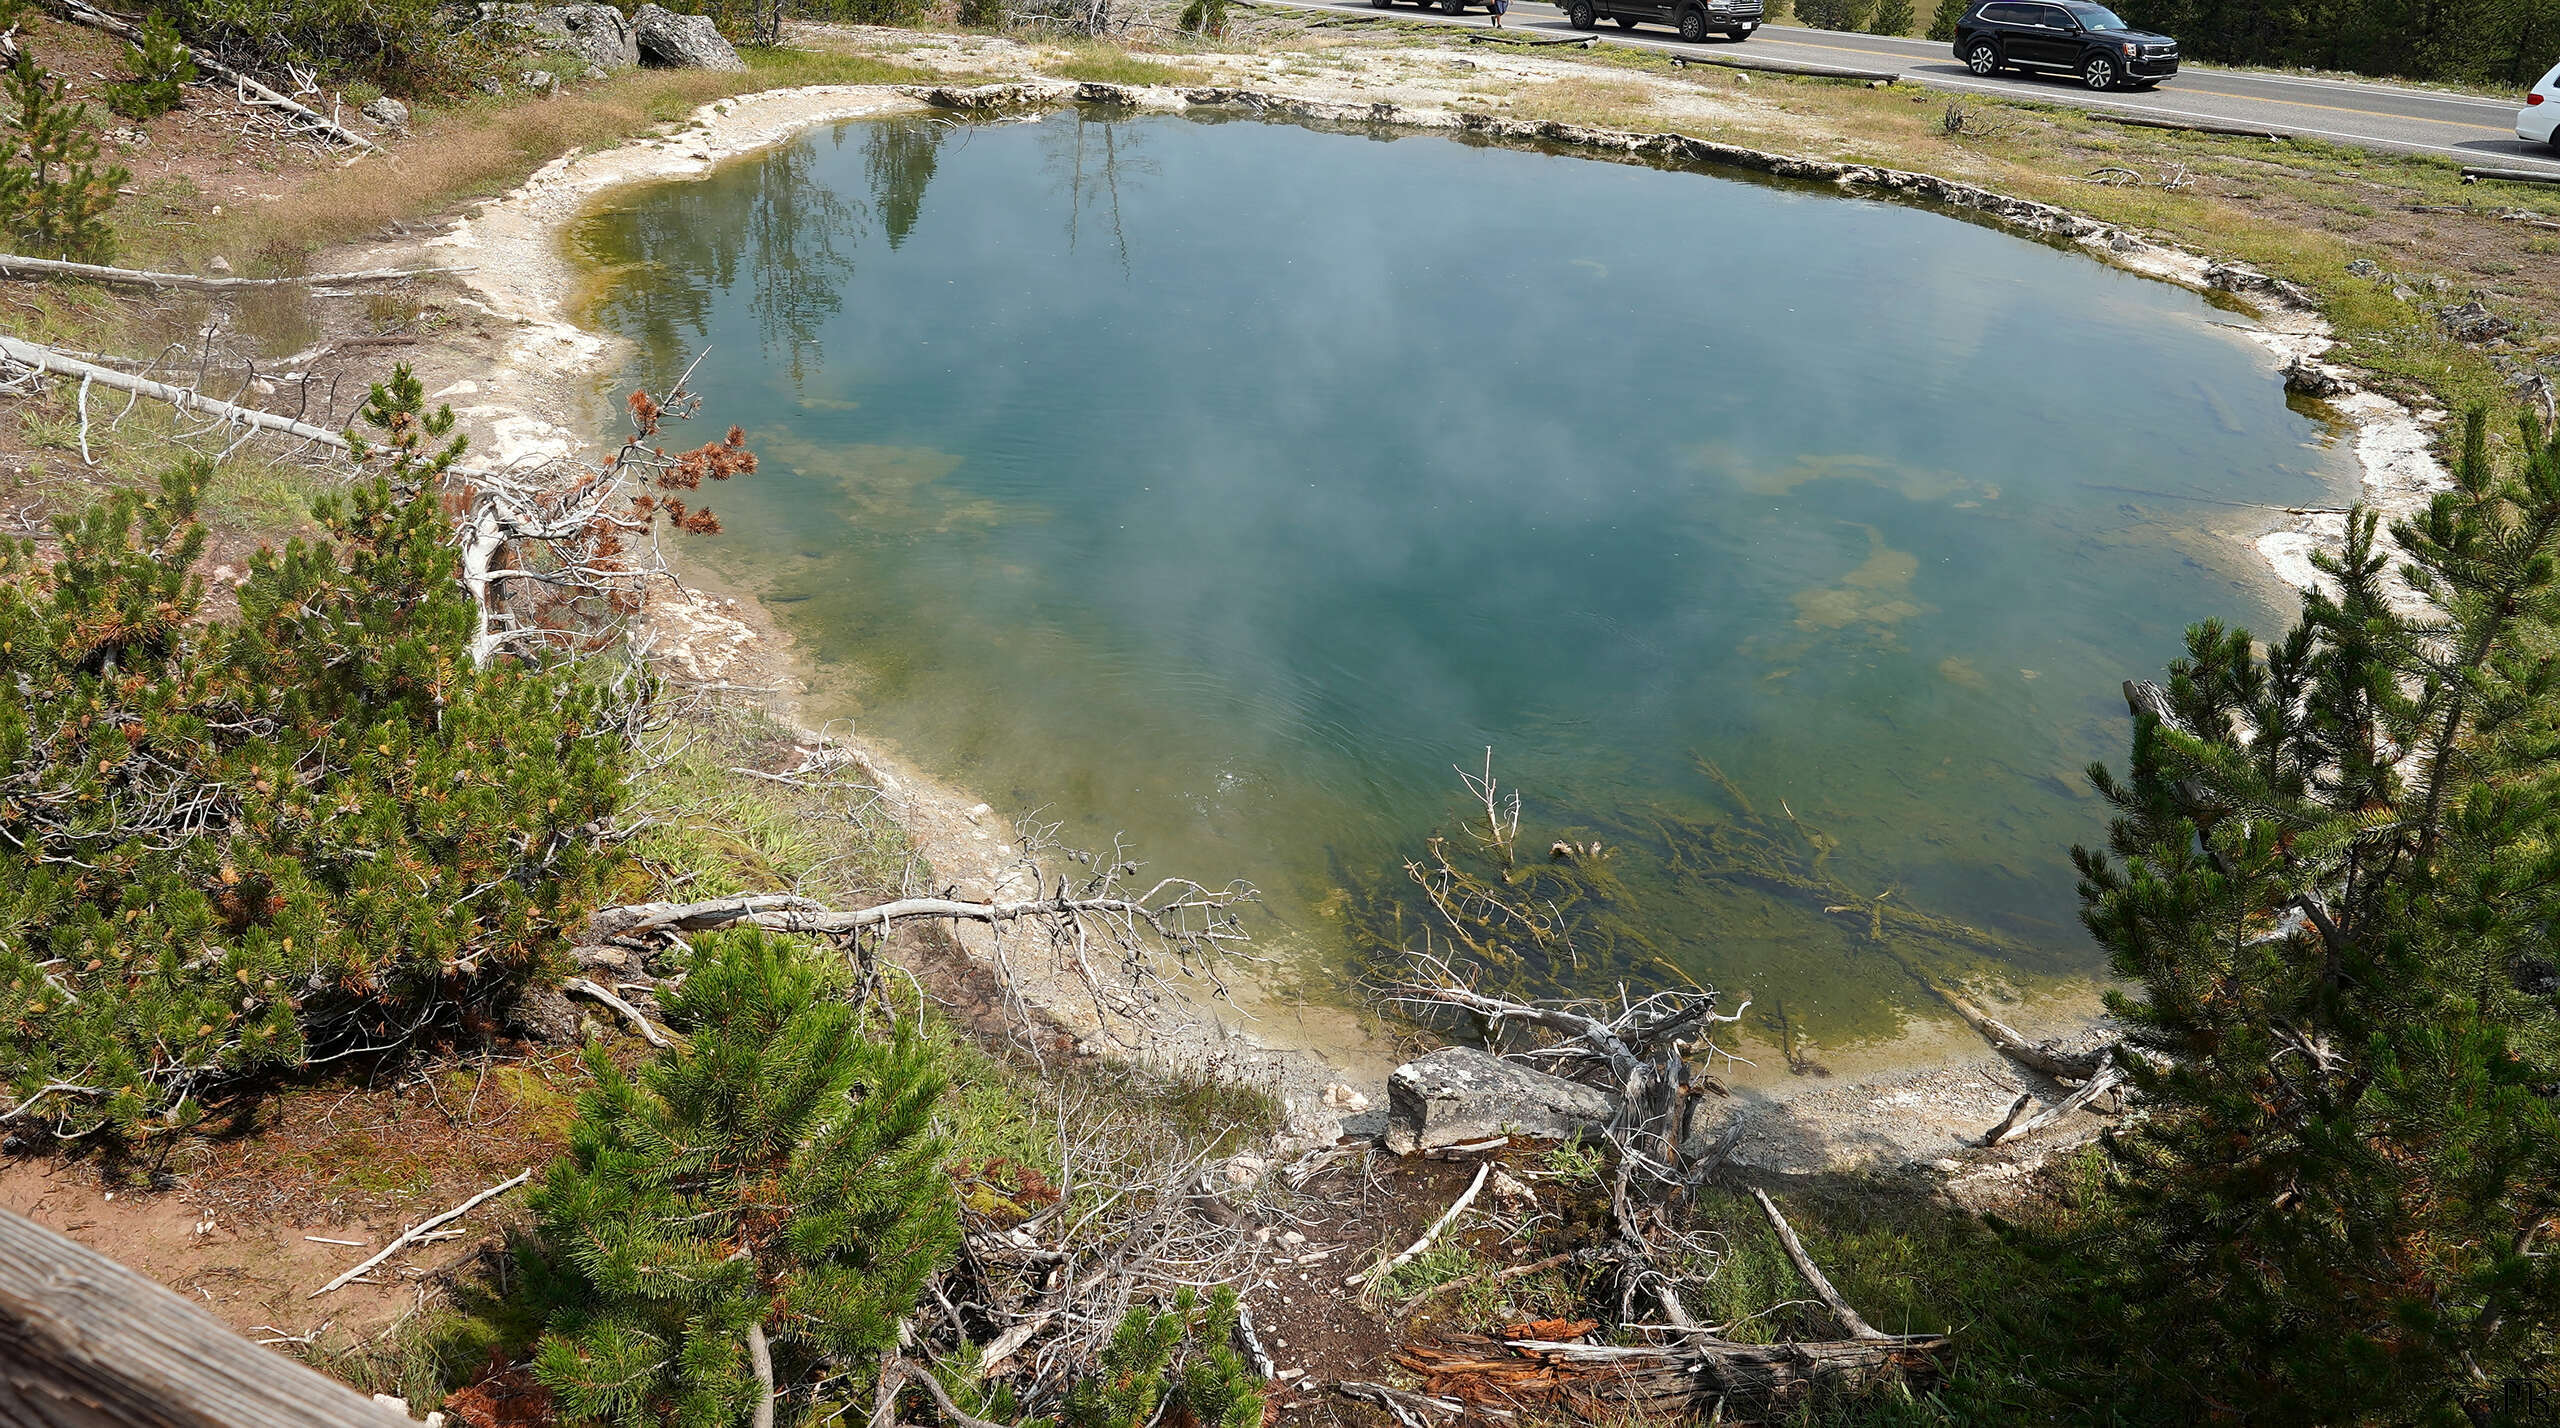 A blue green hot spring